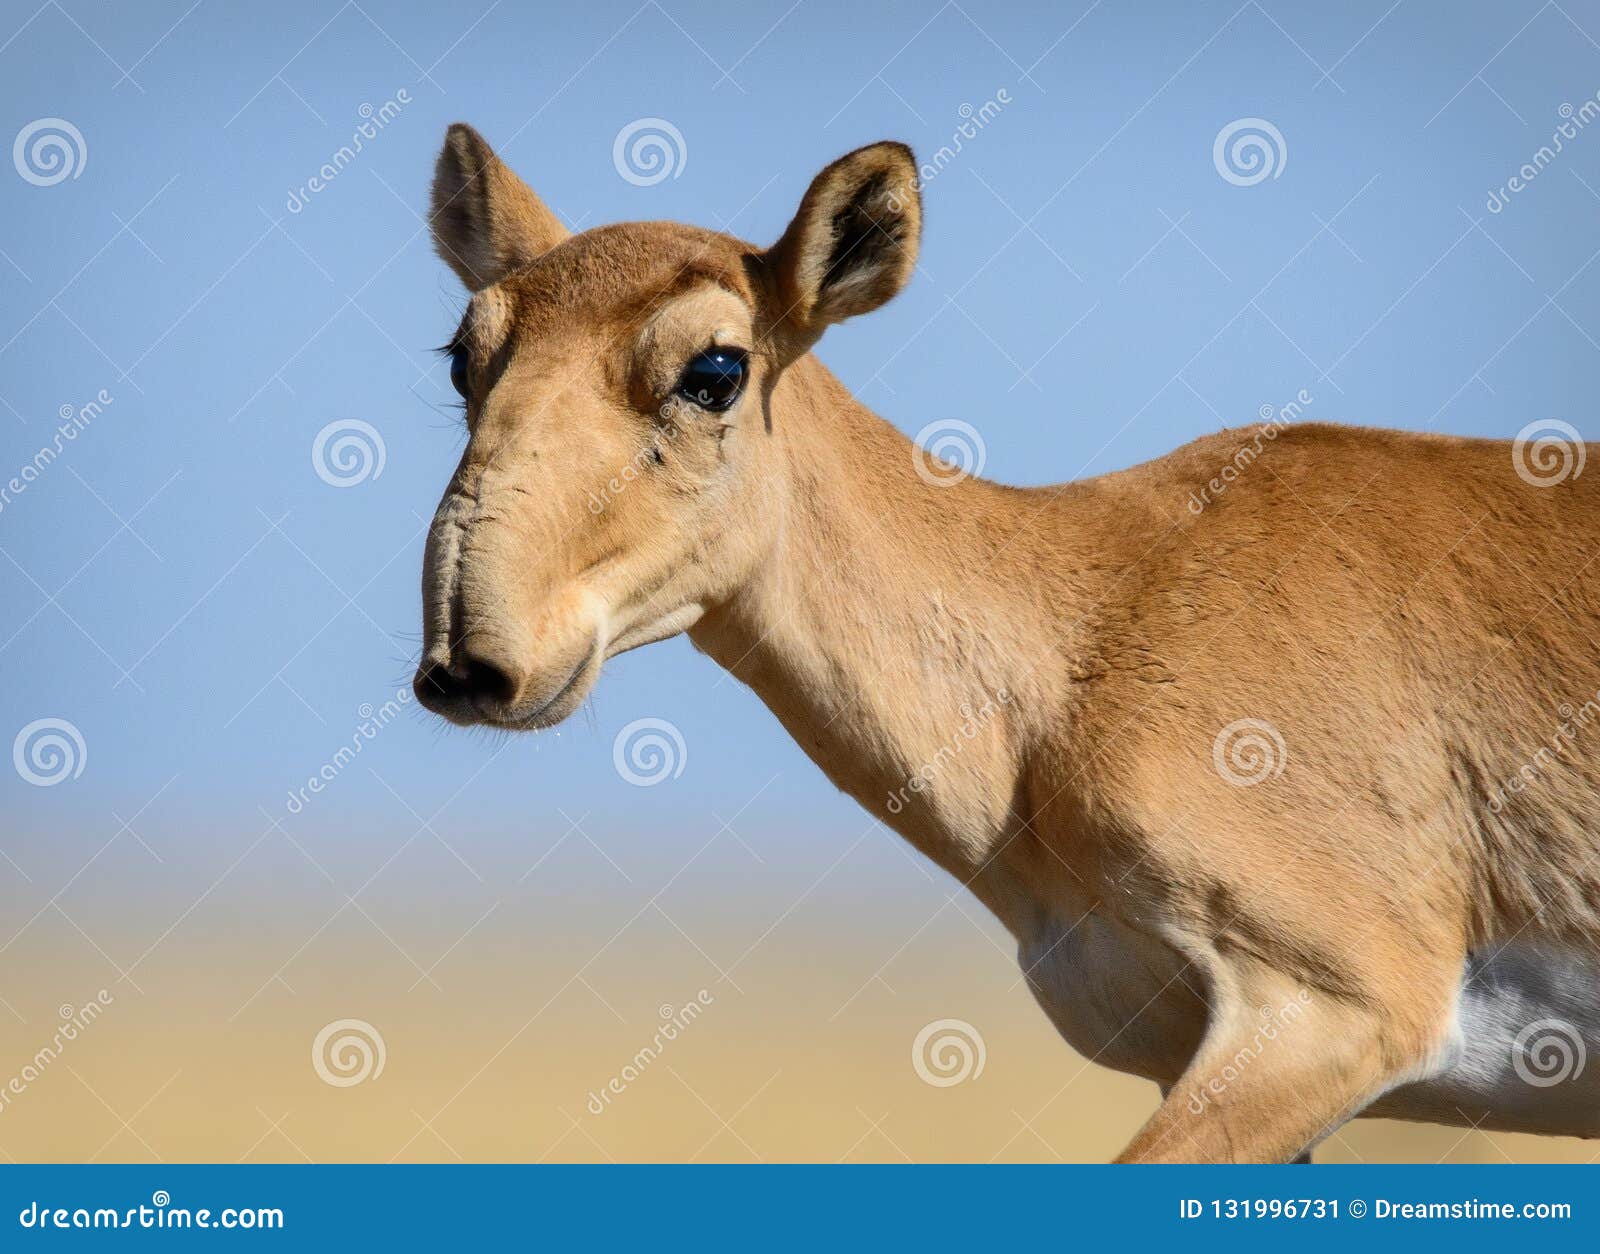 wild saiga antelope saiga tatarica